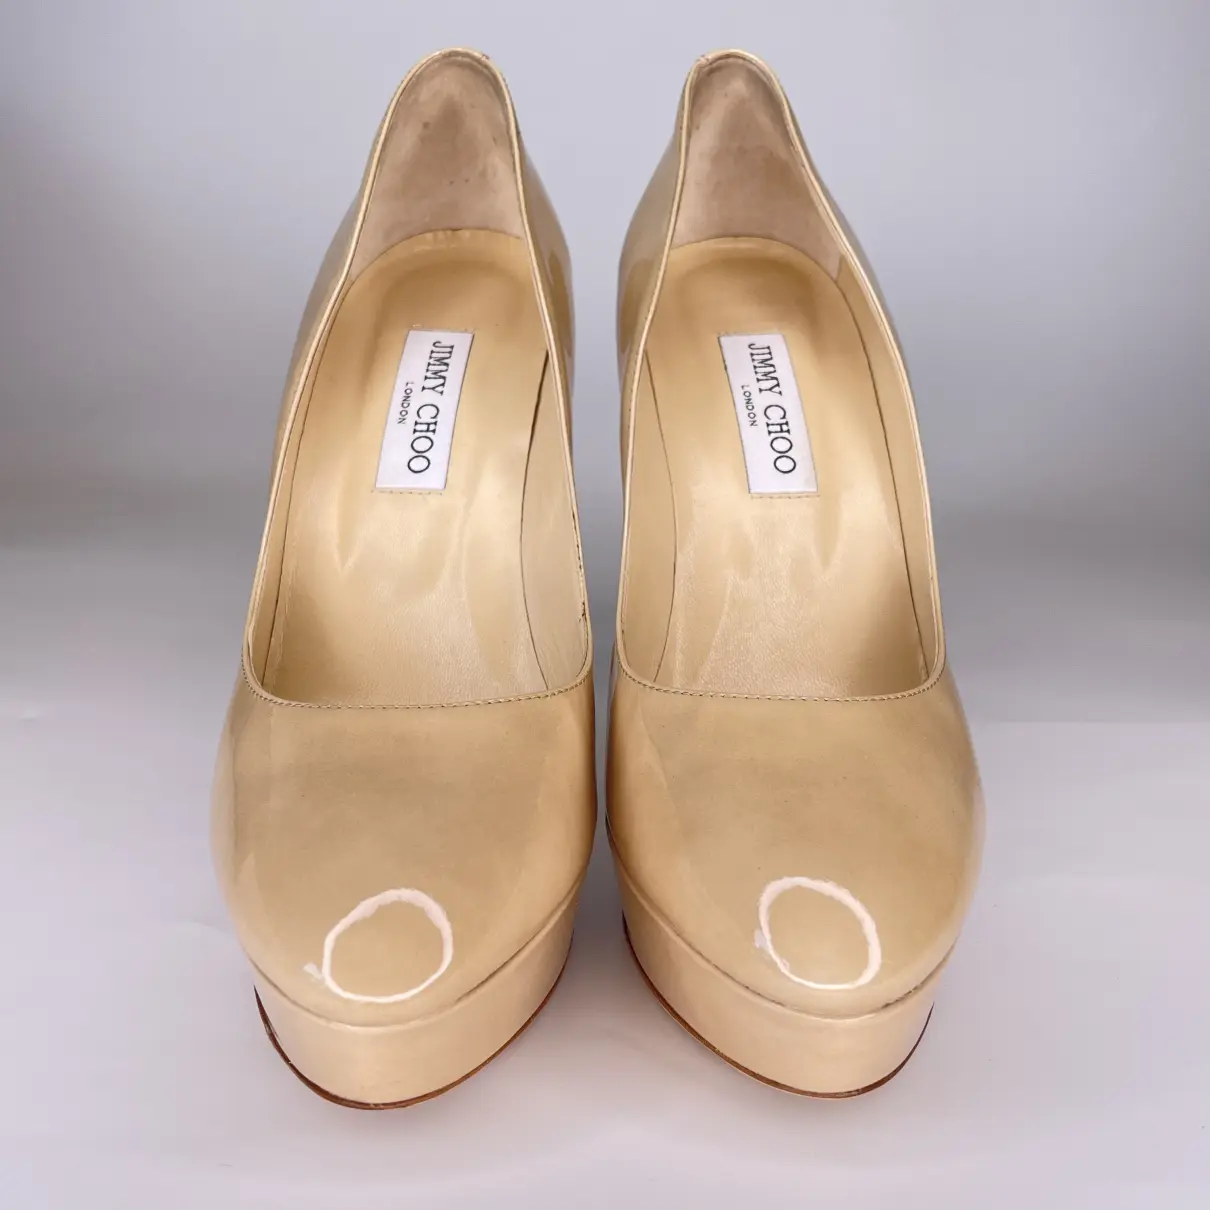 Buy Jimmy Choo Patent leather heels online